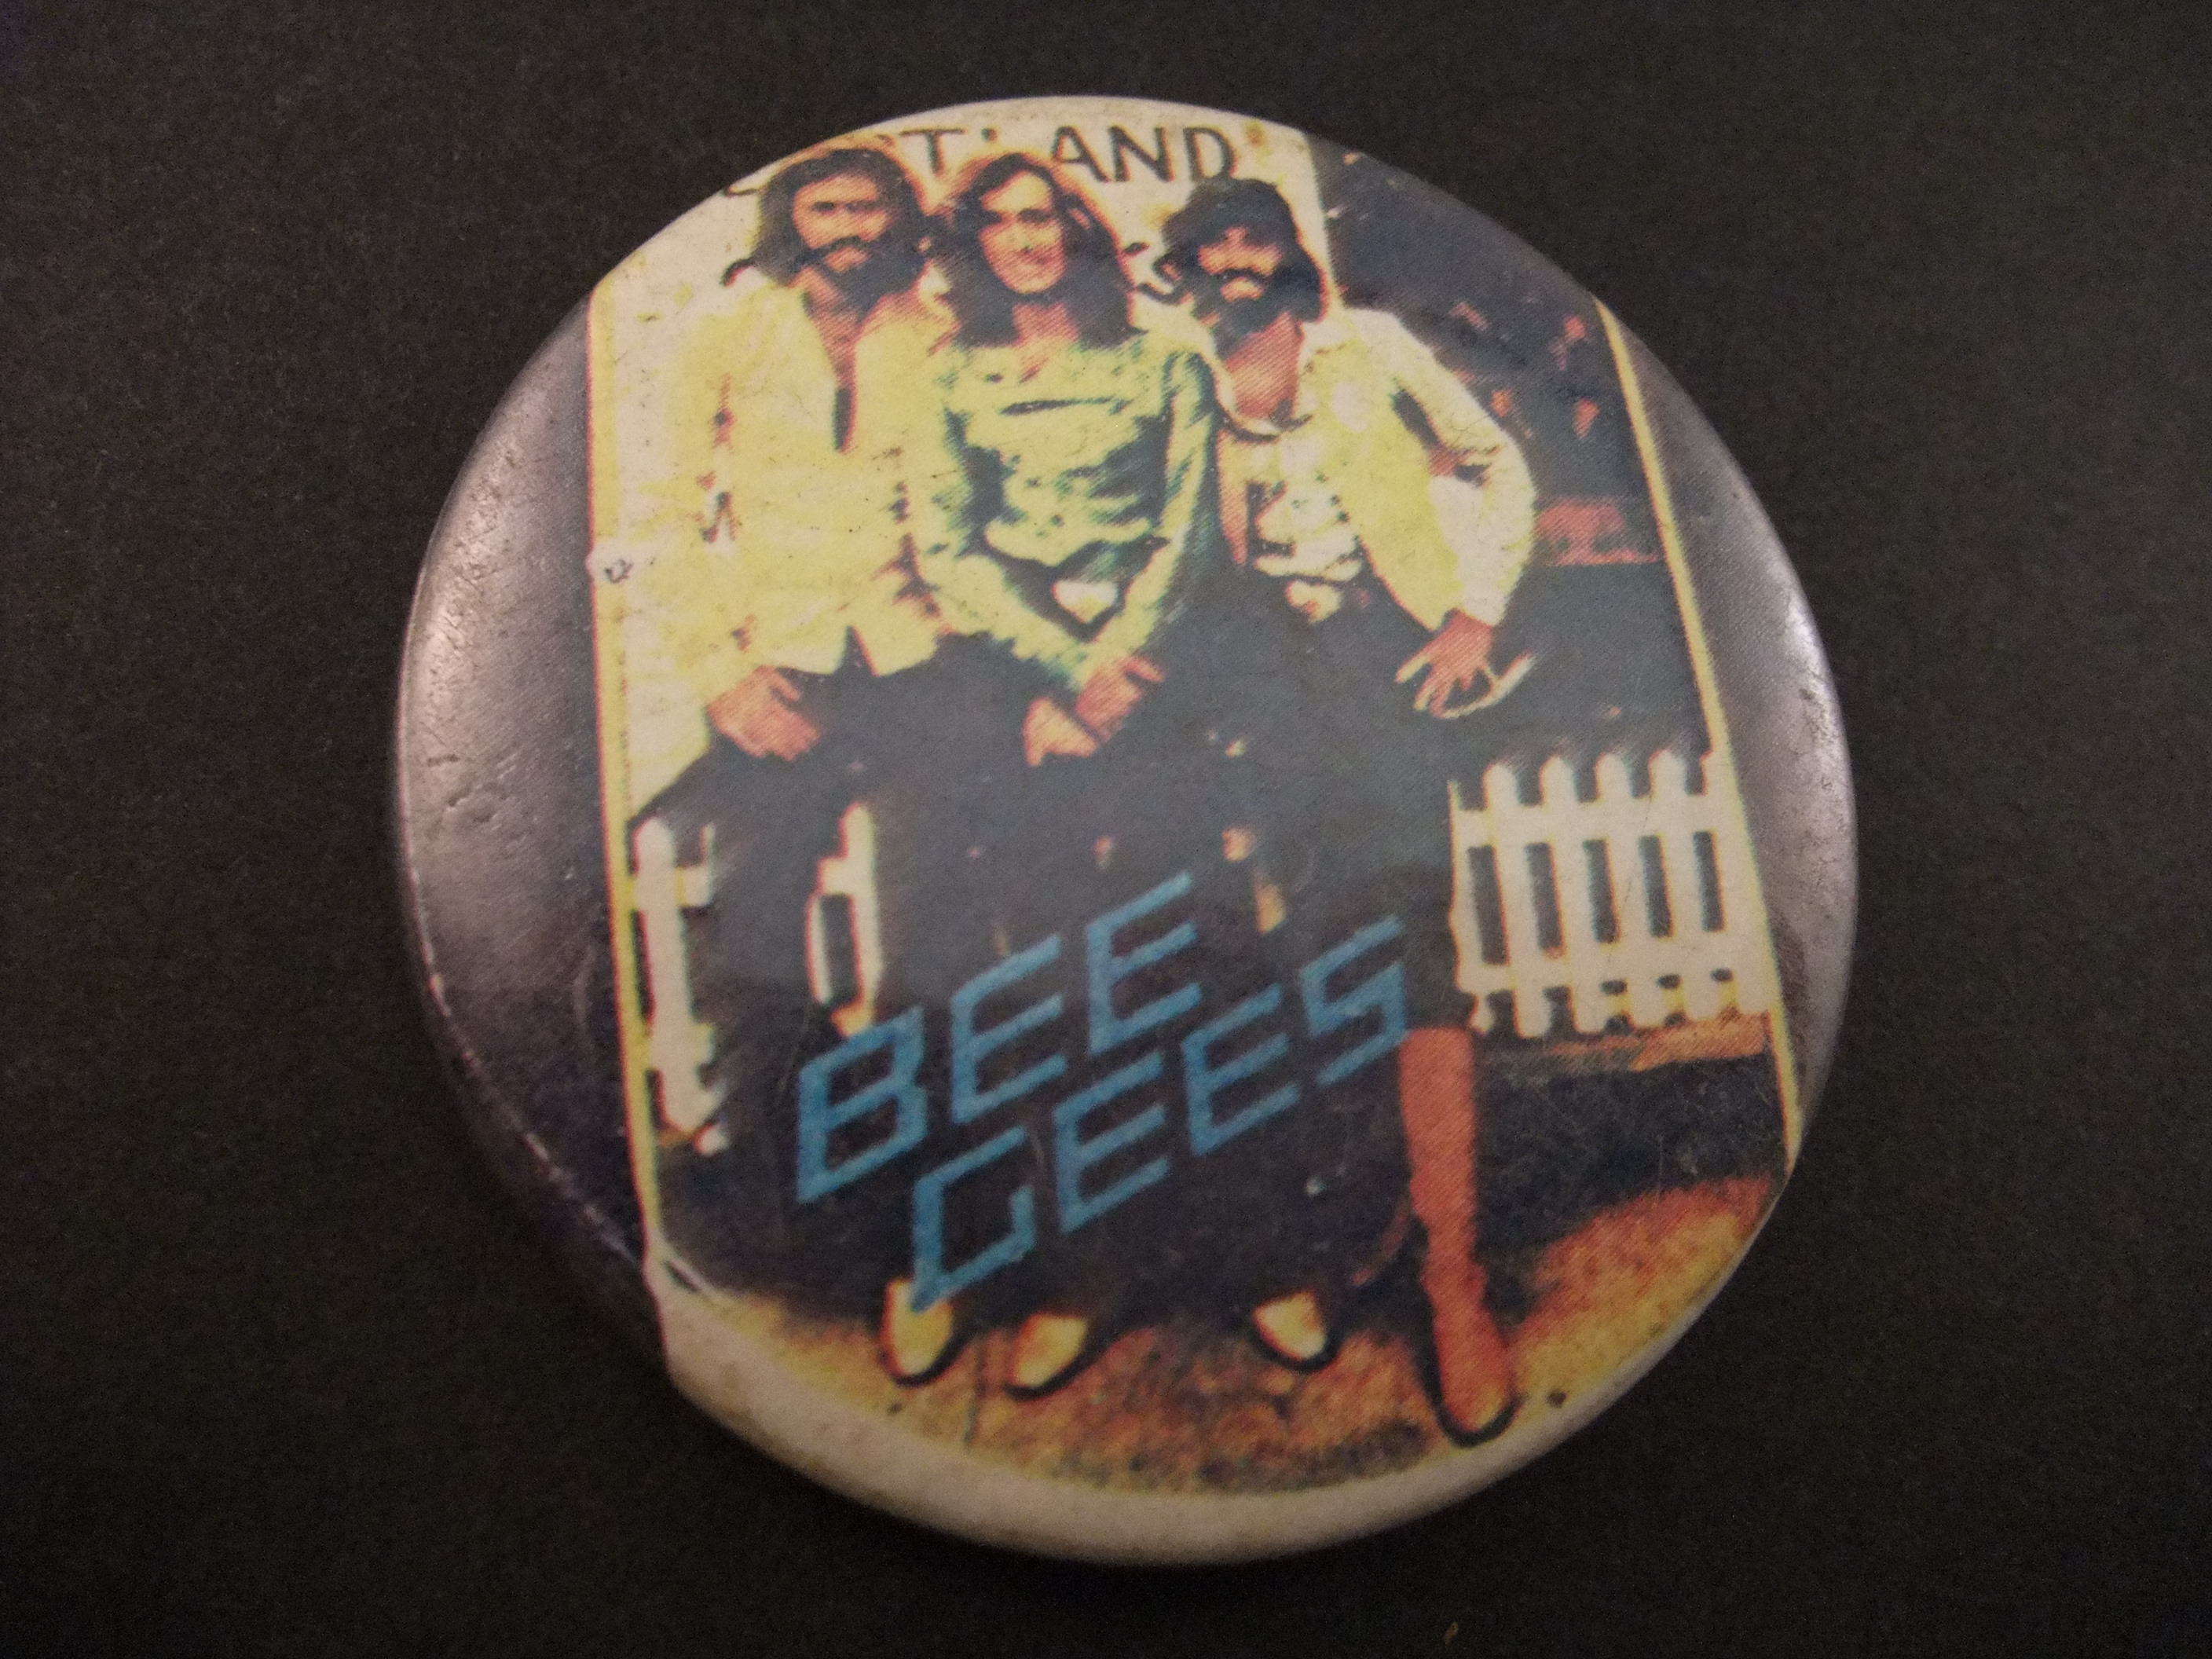 Bee Gees popgroep Robin,Andy en Barry Gibb poserend buiten